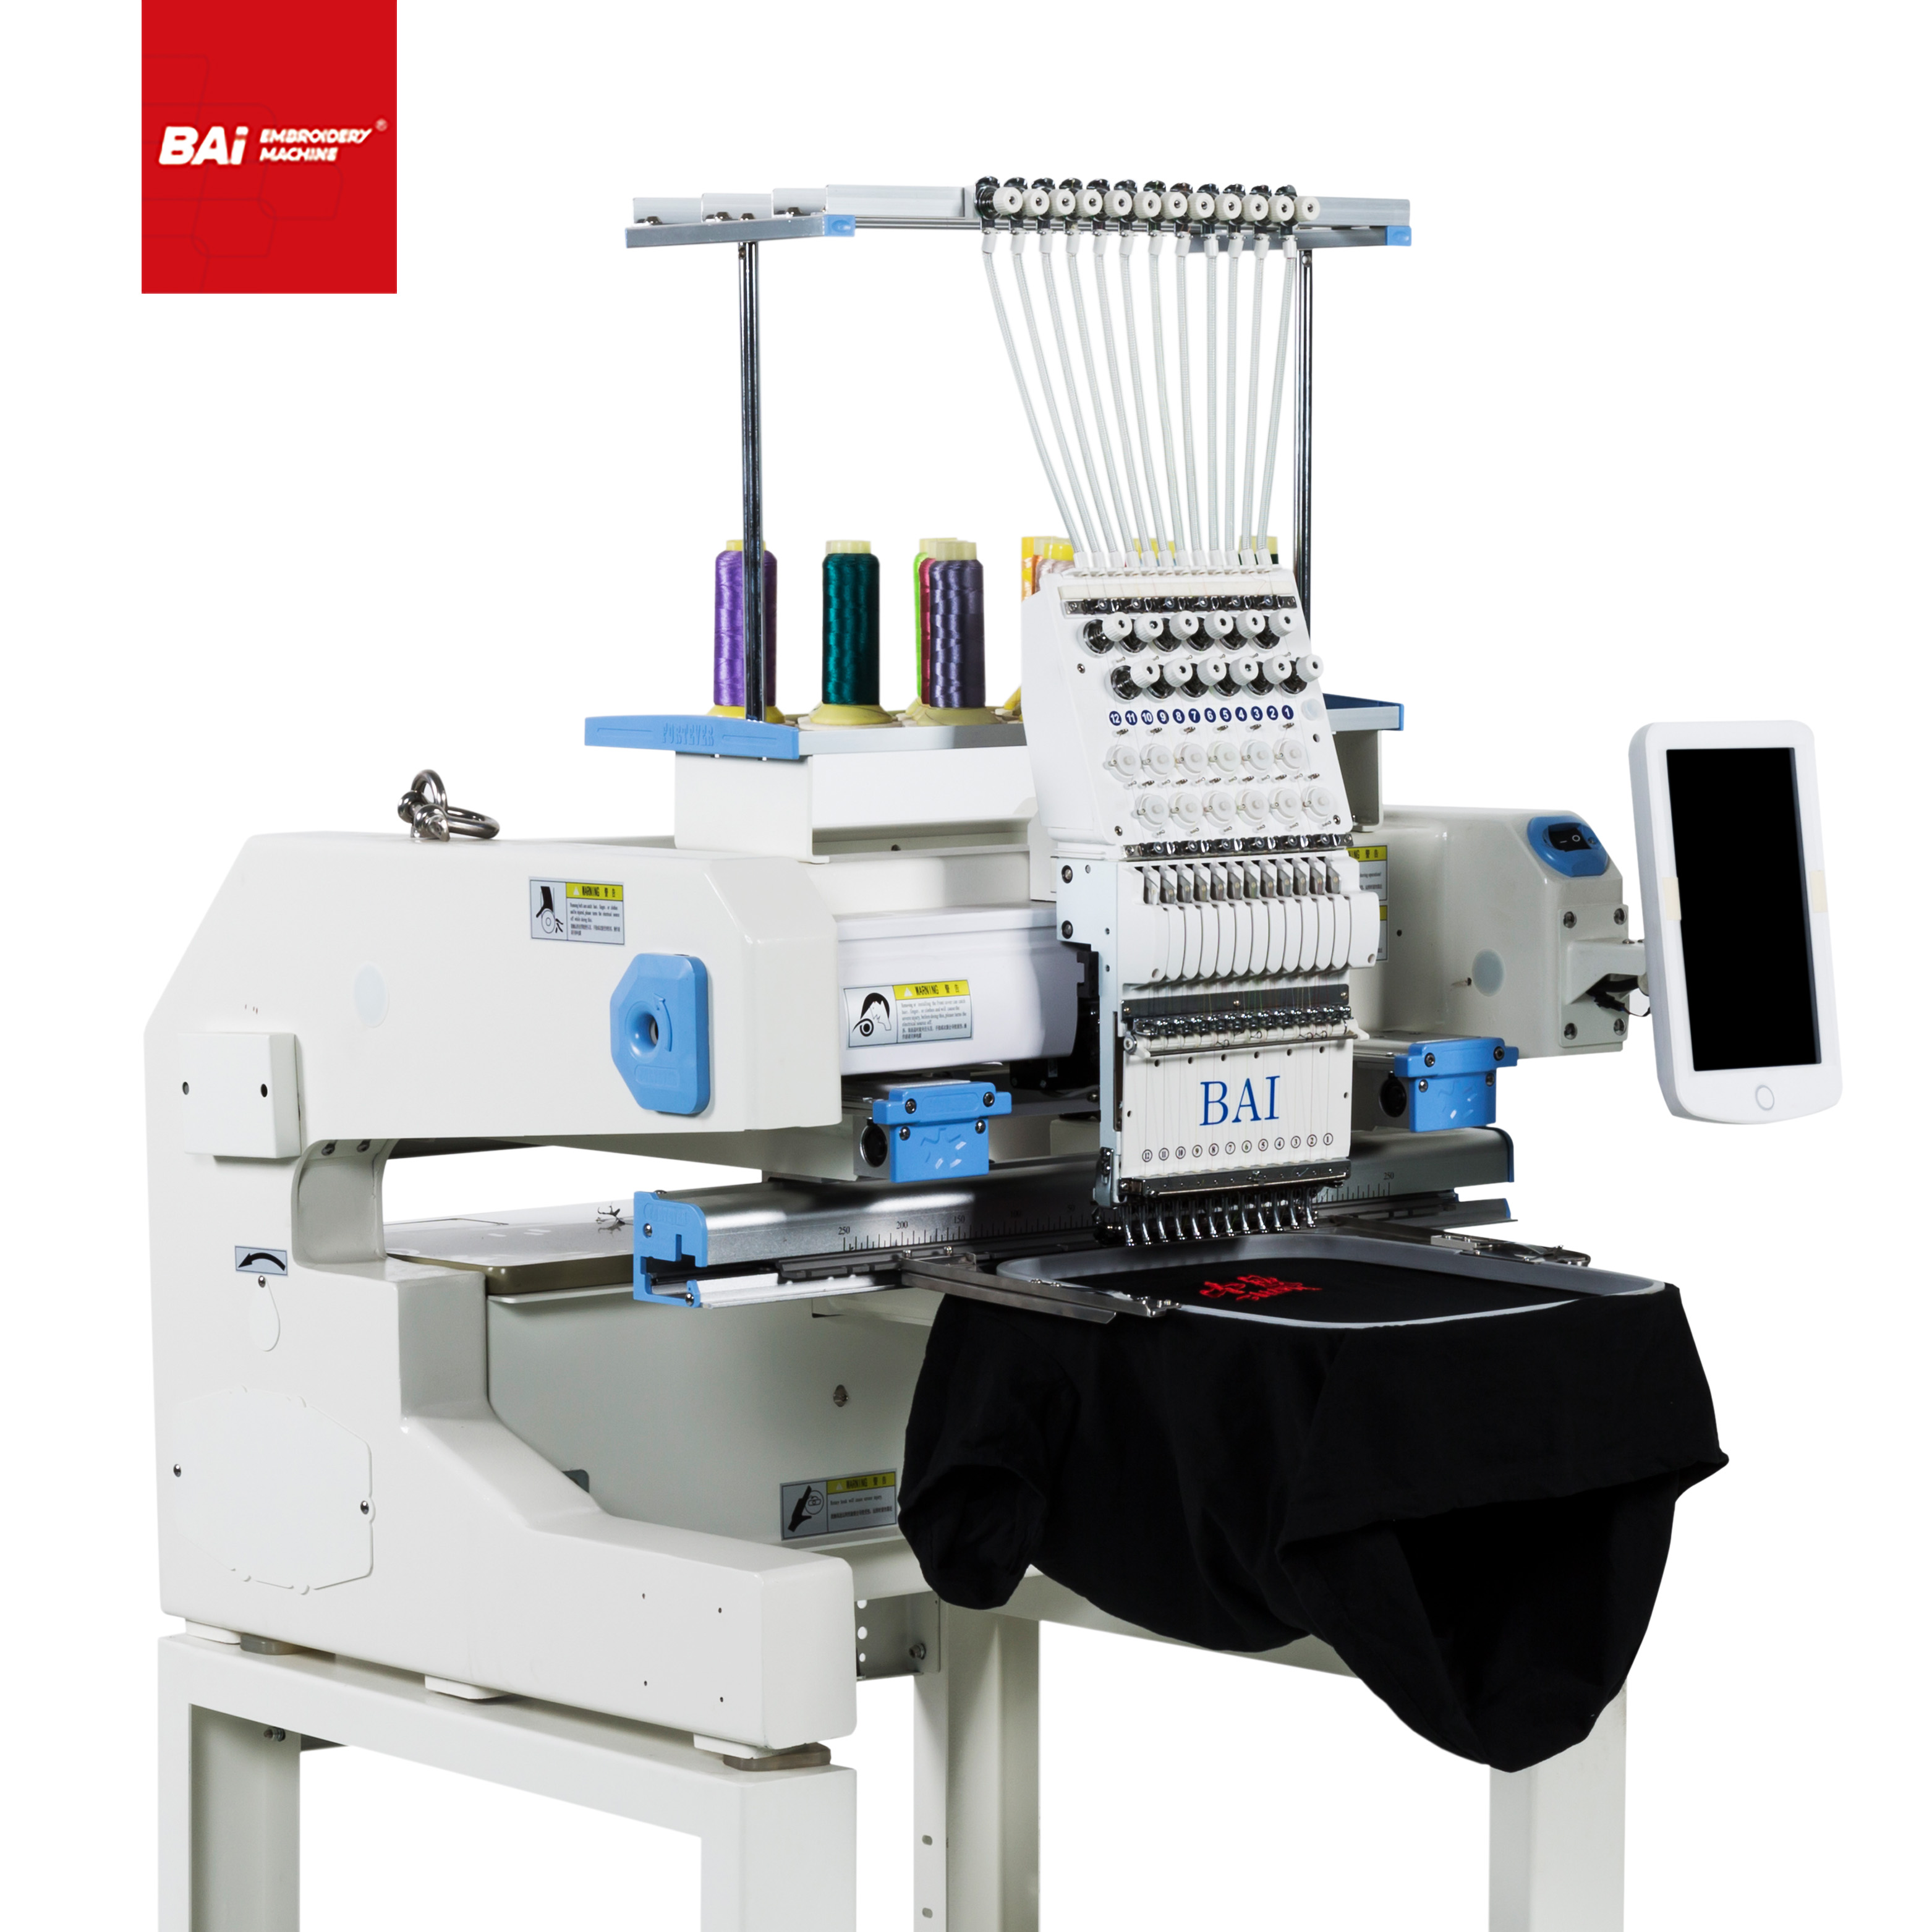 BAI Computer T-shirt Embroidery Machine for Cap/tshirt with Garment